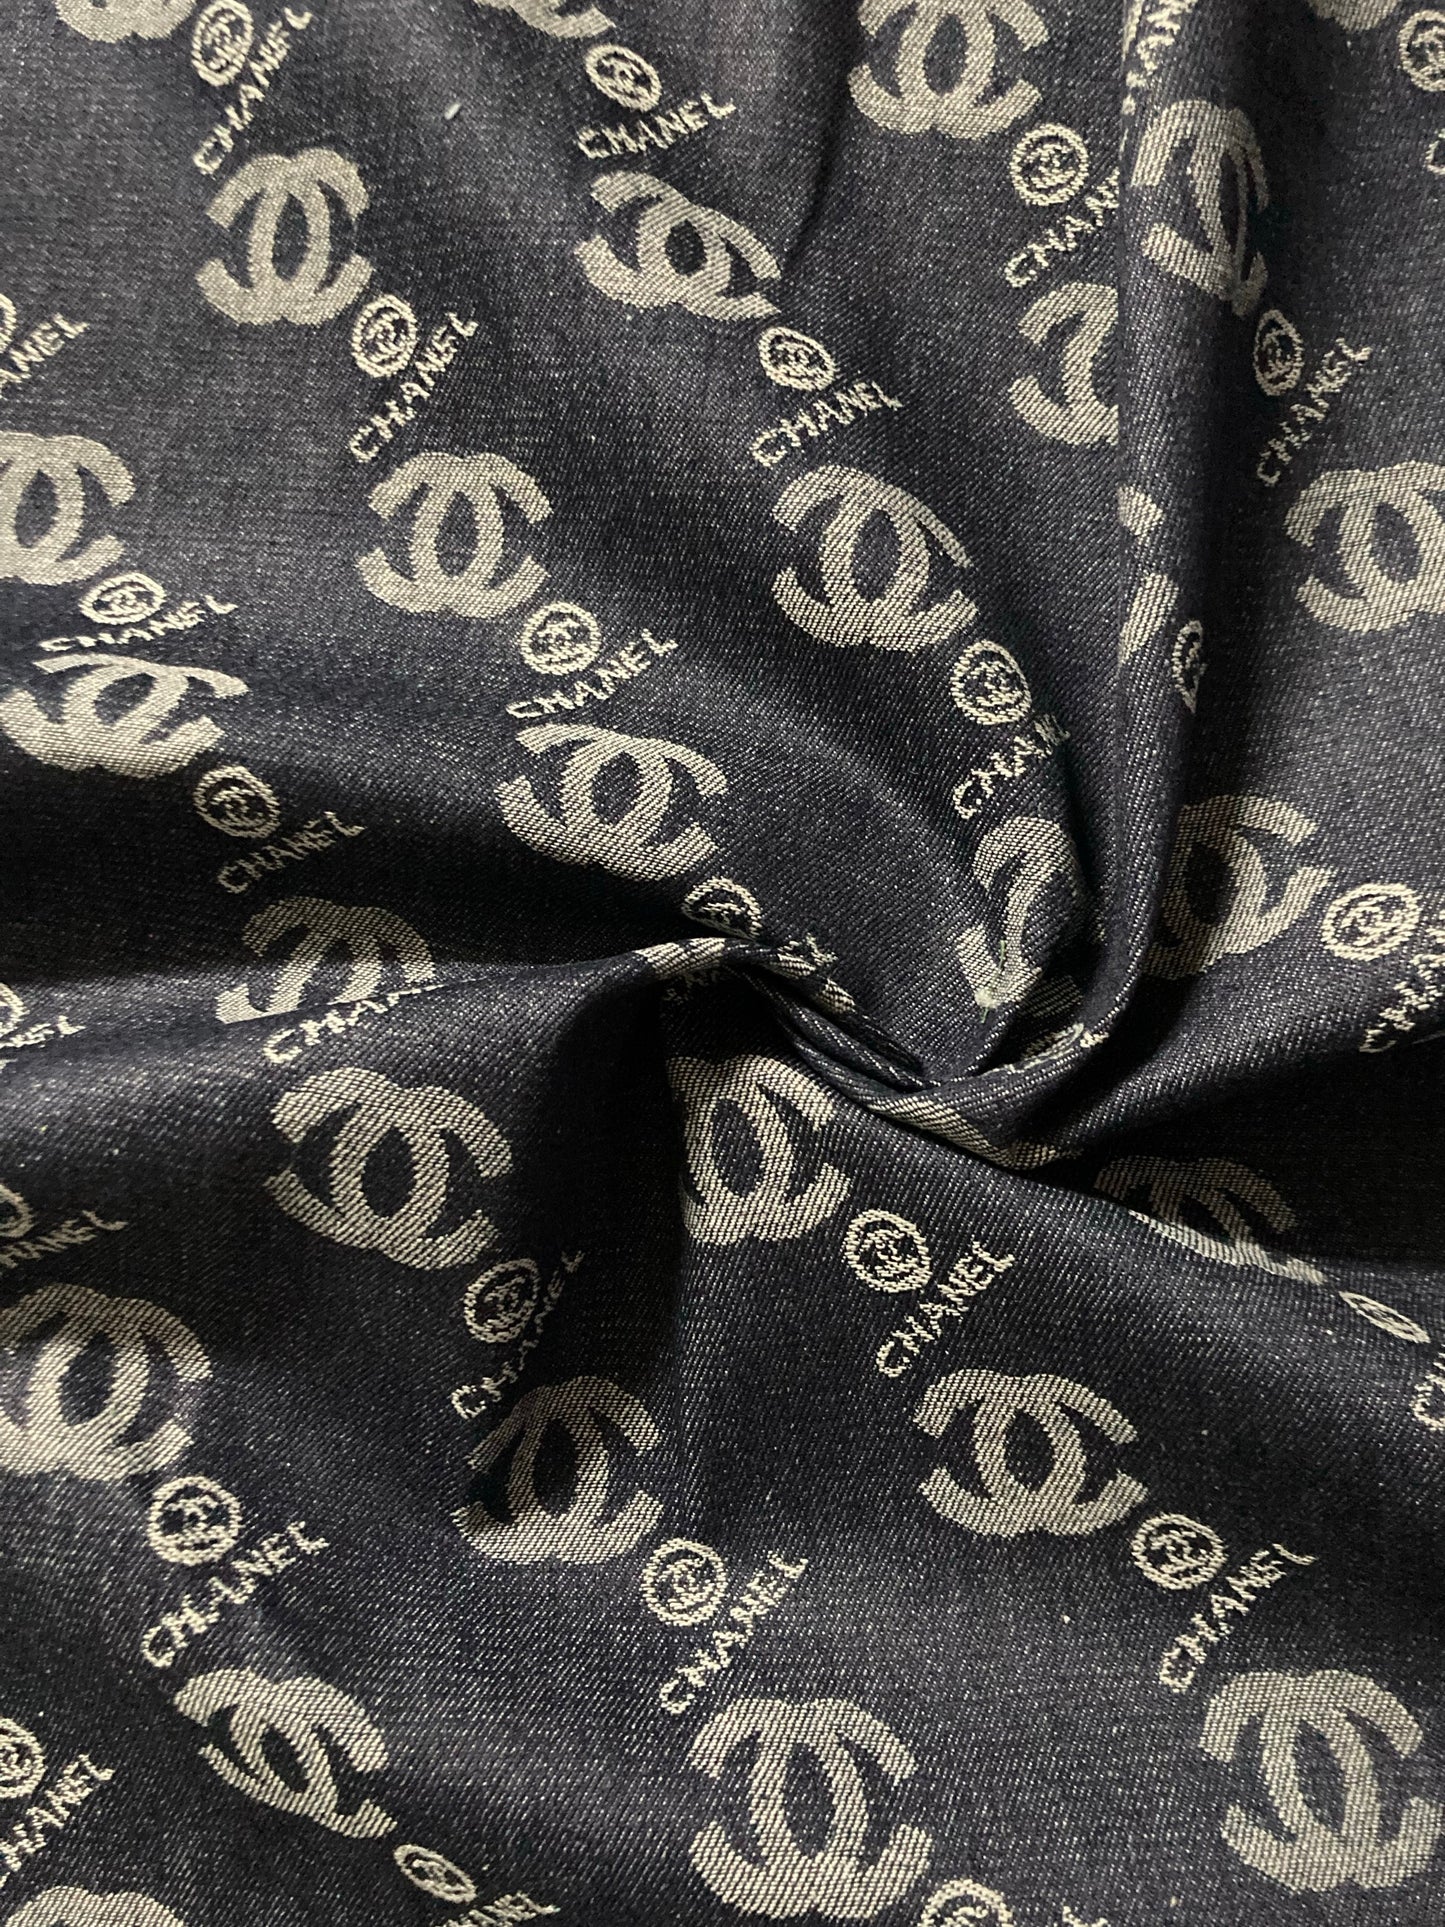 Handmade Chanel Denim Fabric for Custom Jeans